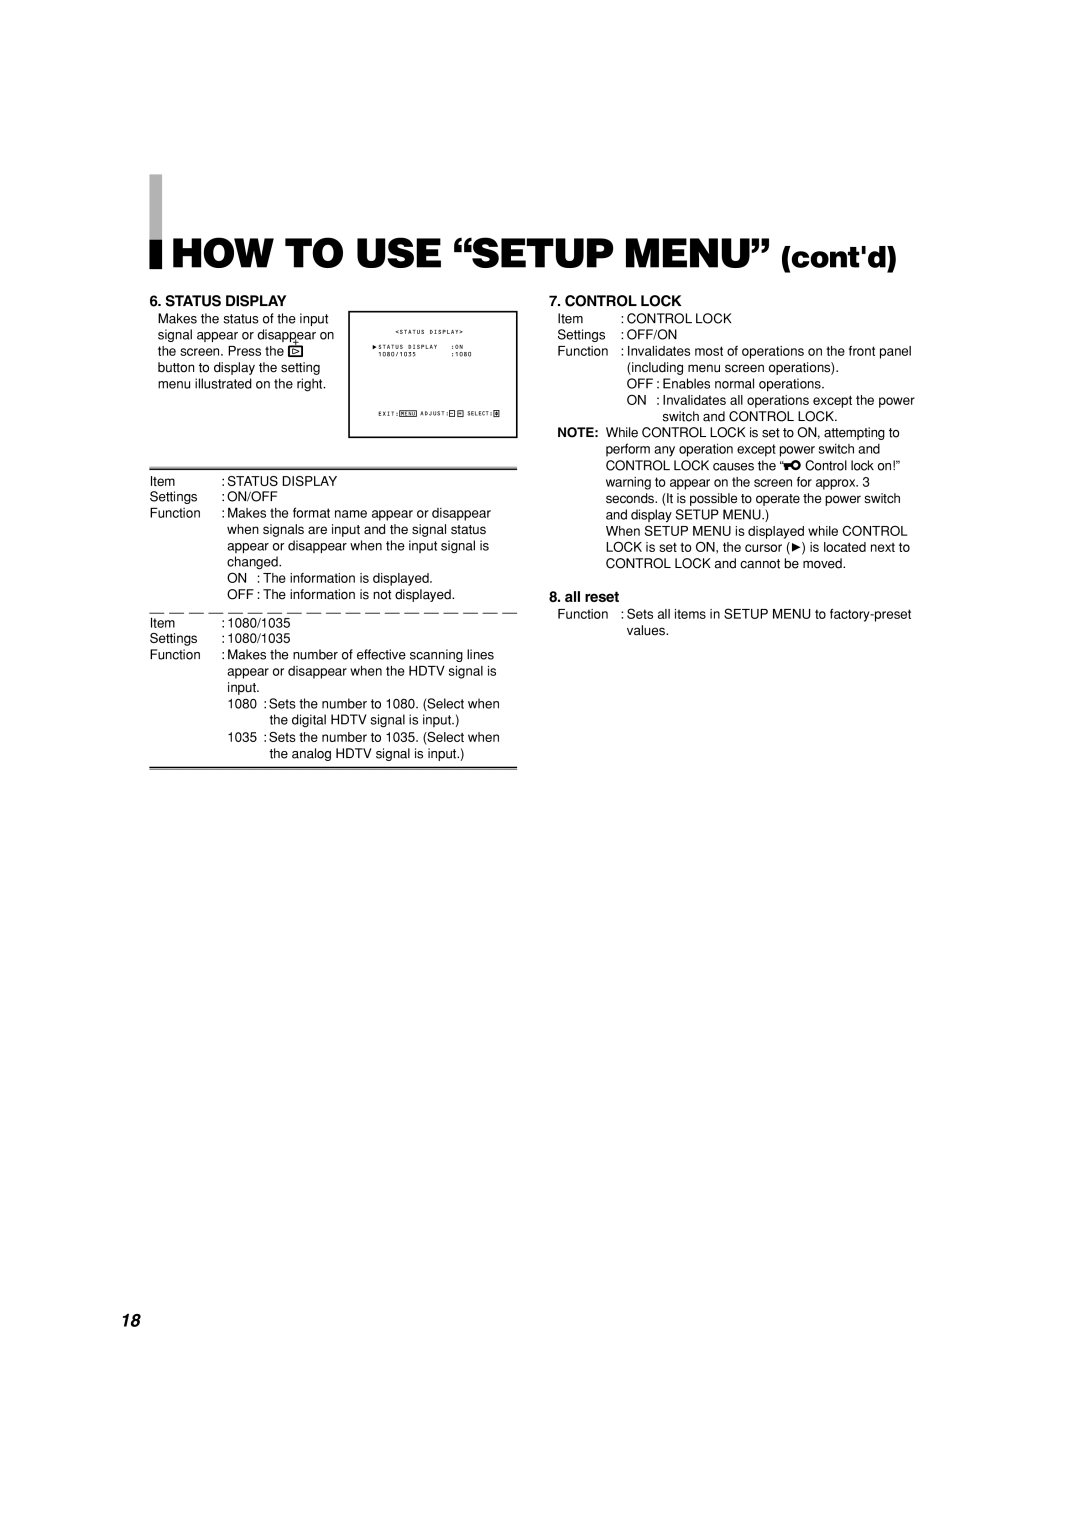 Panasonic BT-H1700AE manual HOW TO USE “SETUP MENU” contd, Status Display, Control Lock, all reset 